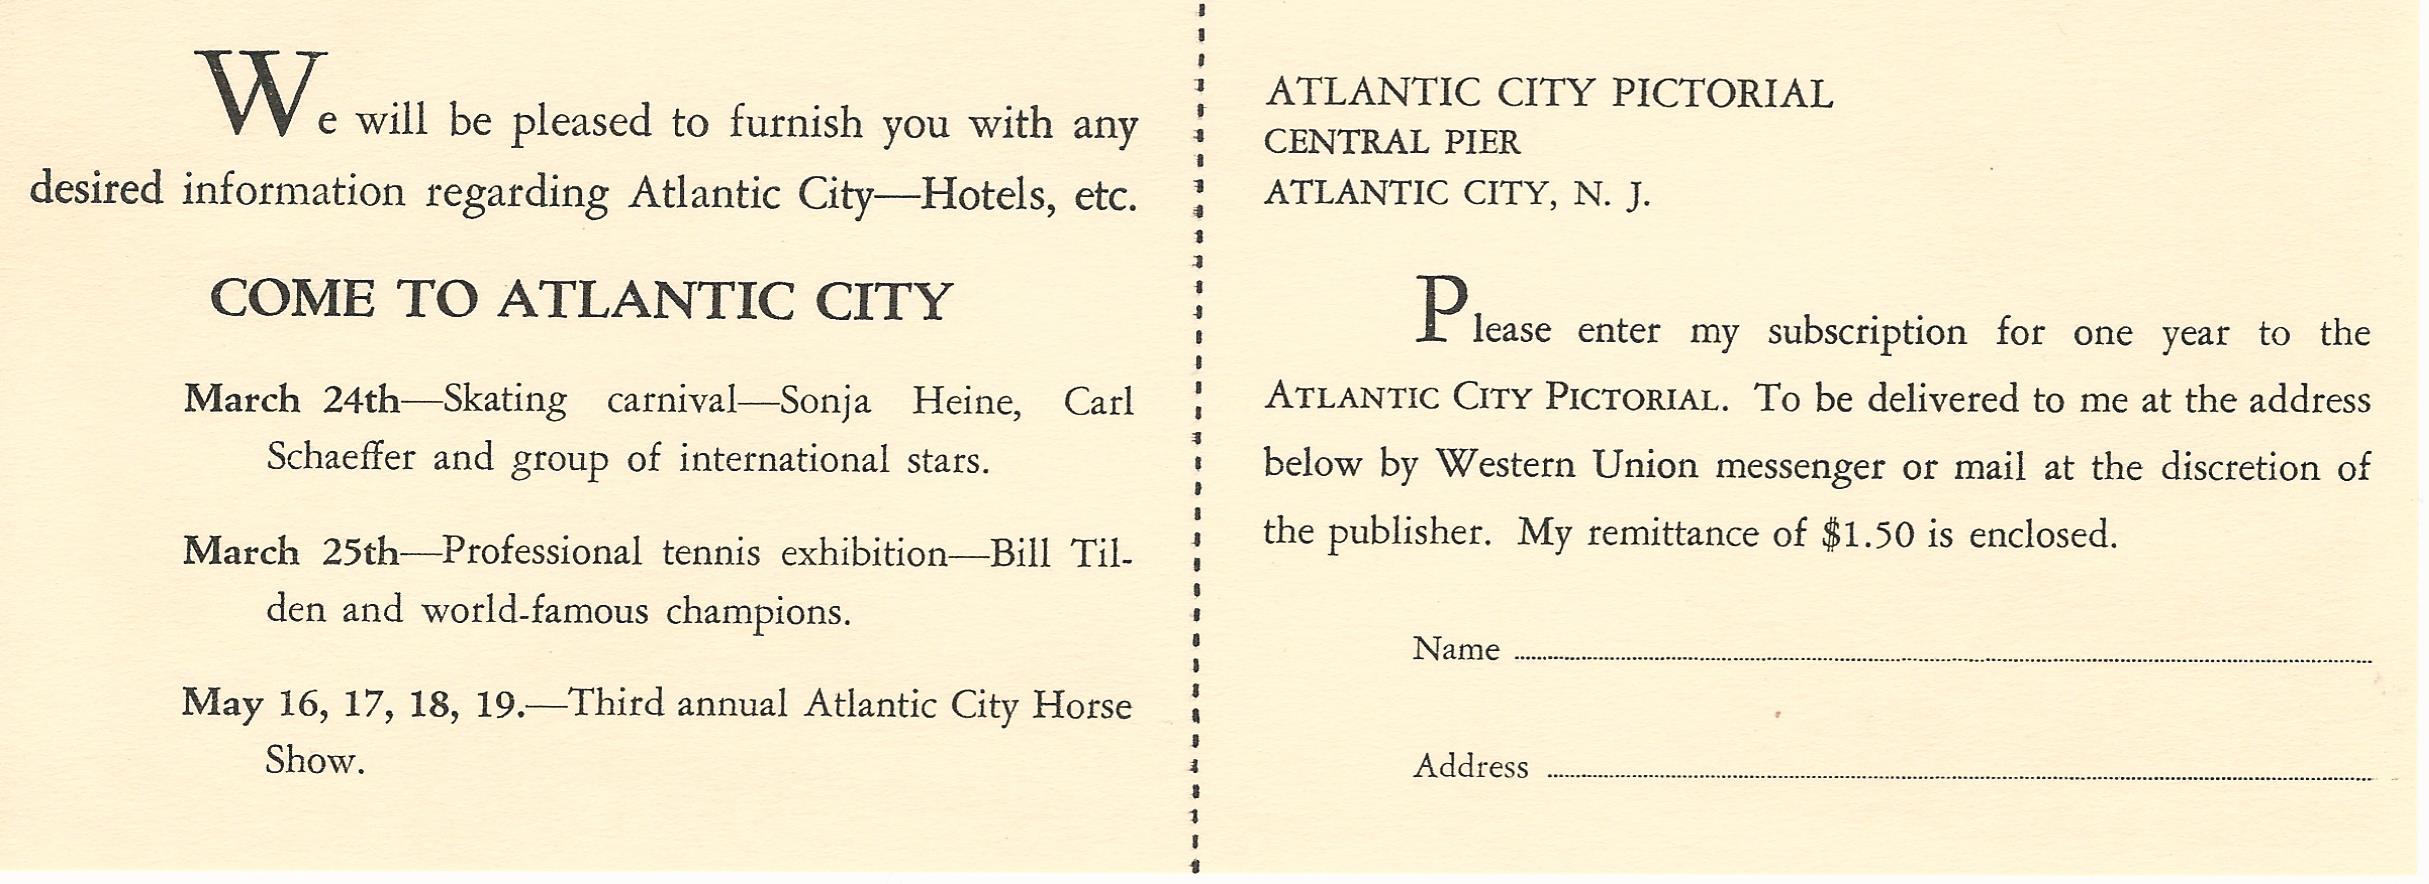 Atlantic City Pictorial 1934 insert